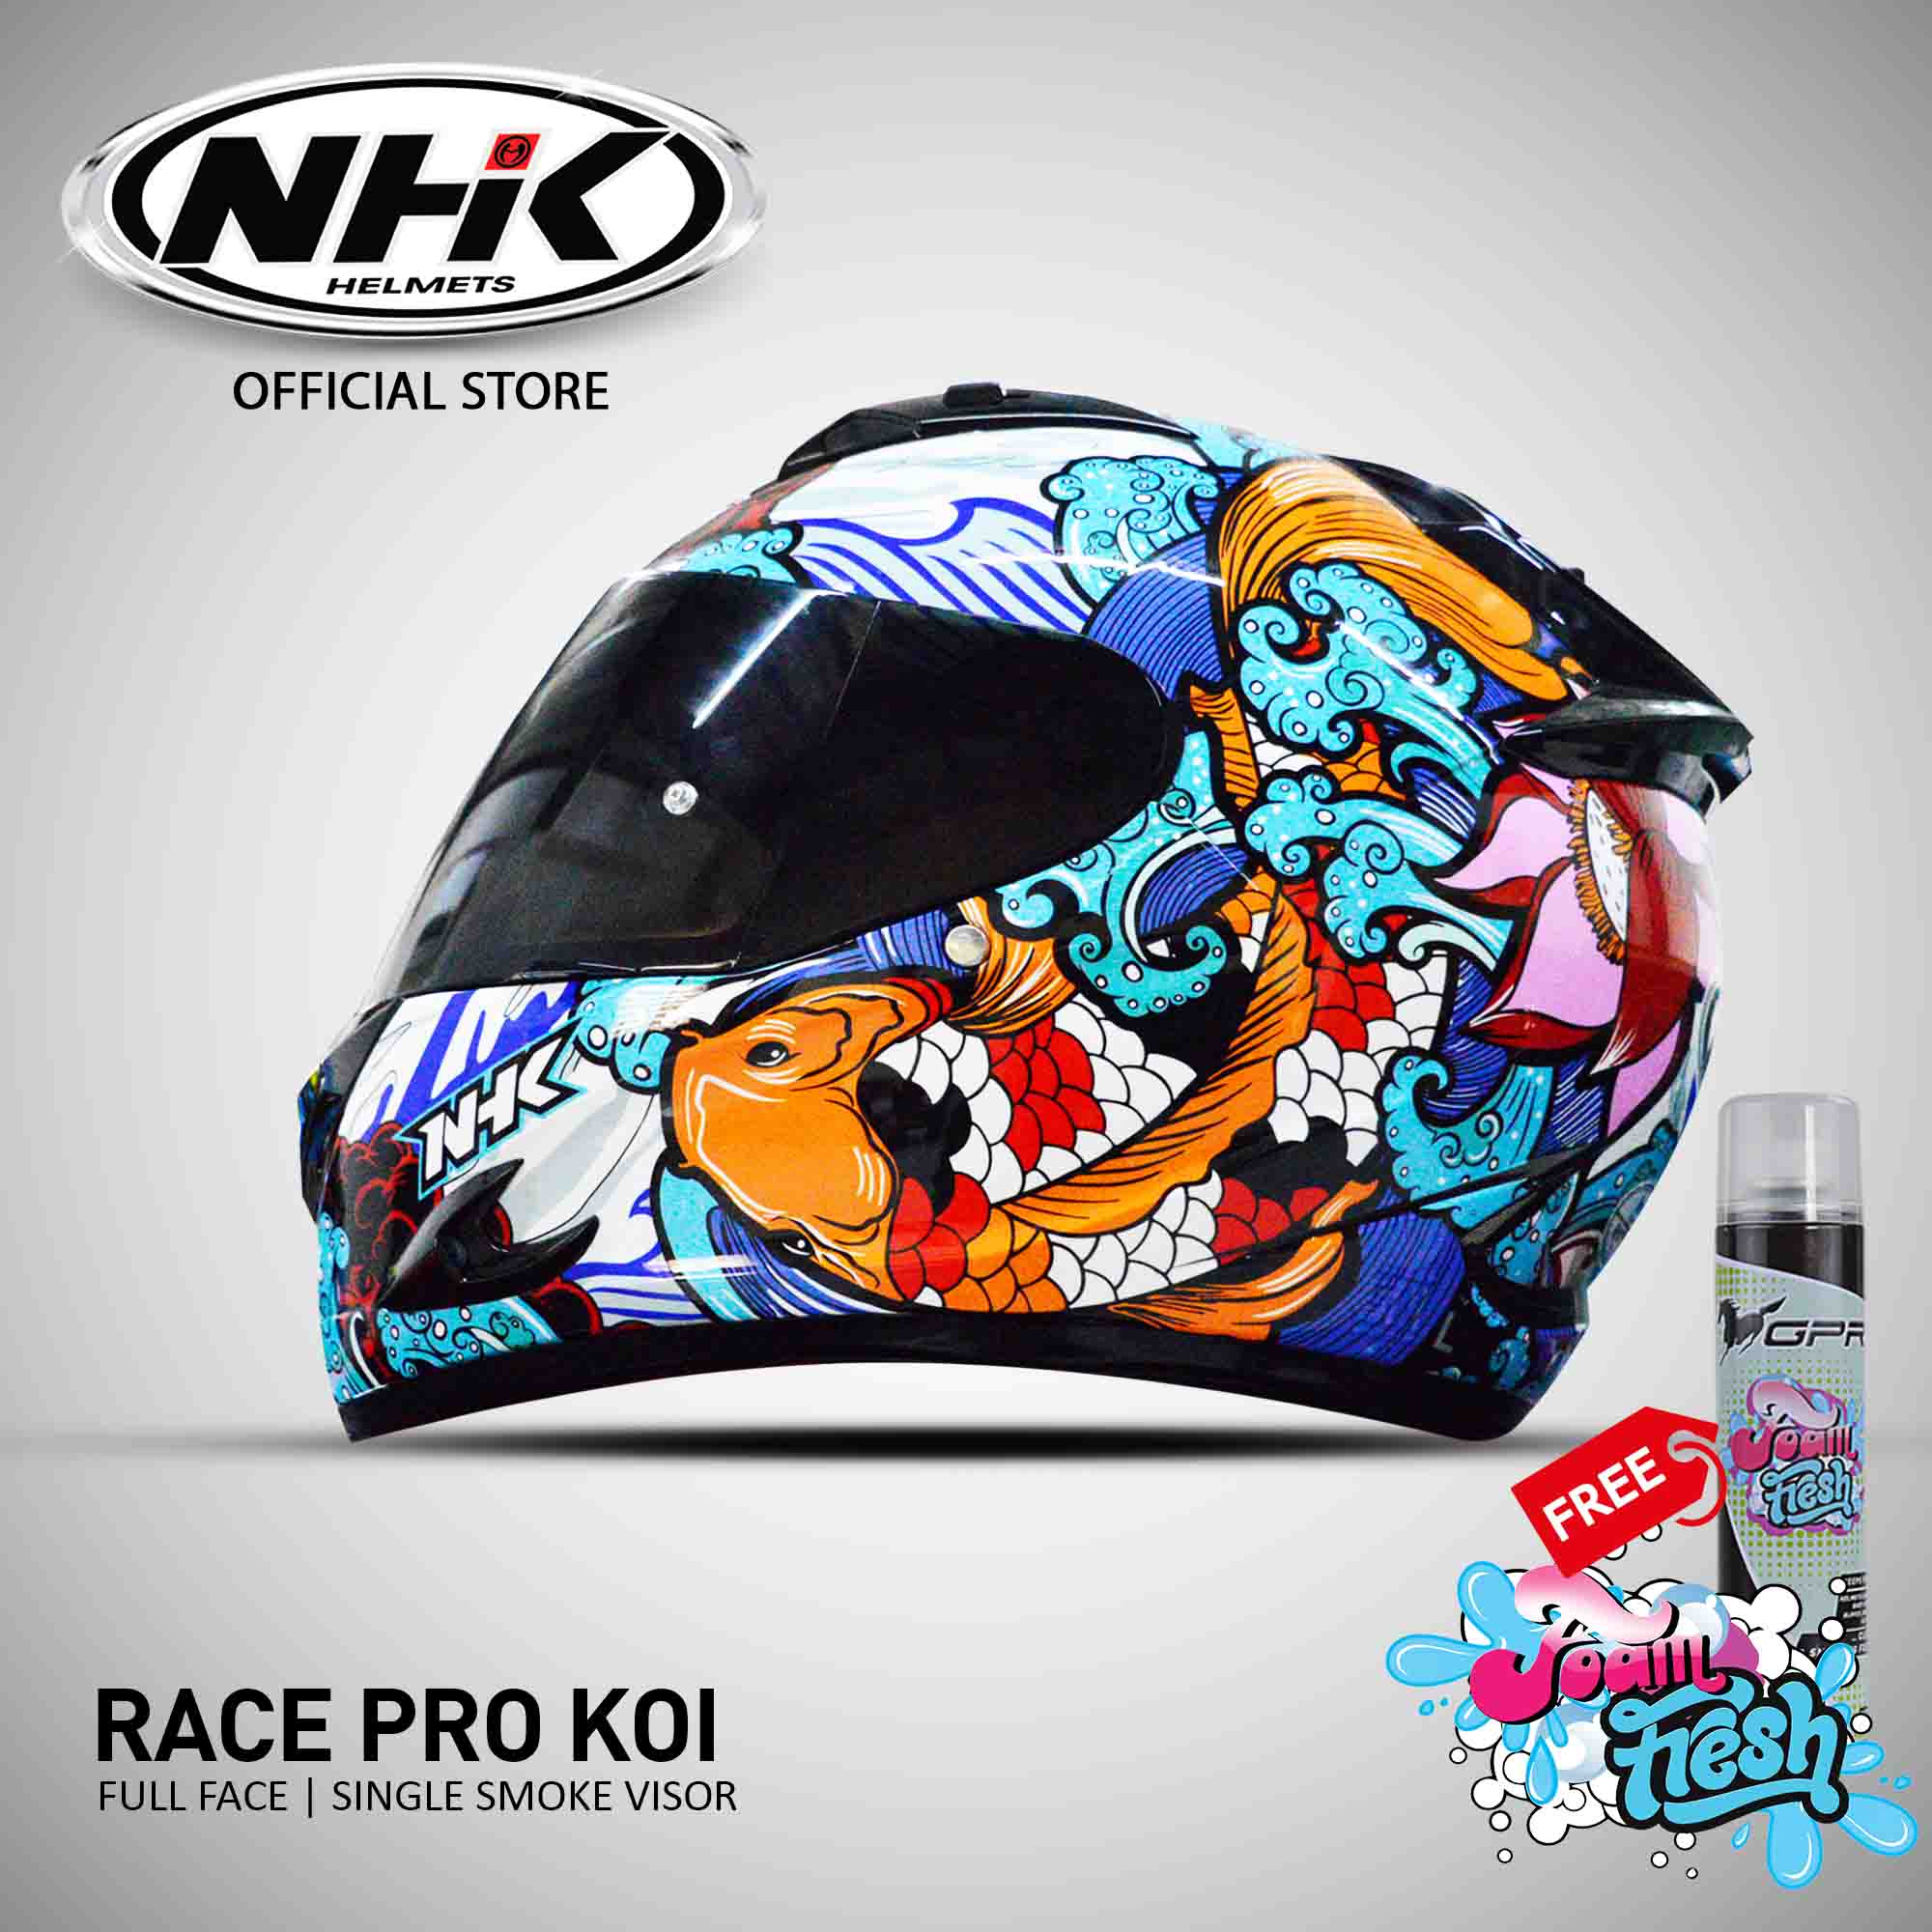 Nhk Helmet Race Pro Koi Single Visor With Free Gpr Foam Fresh Nhk Helmets Official Lazada Ph